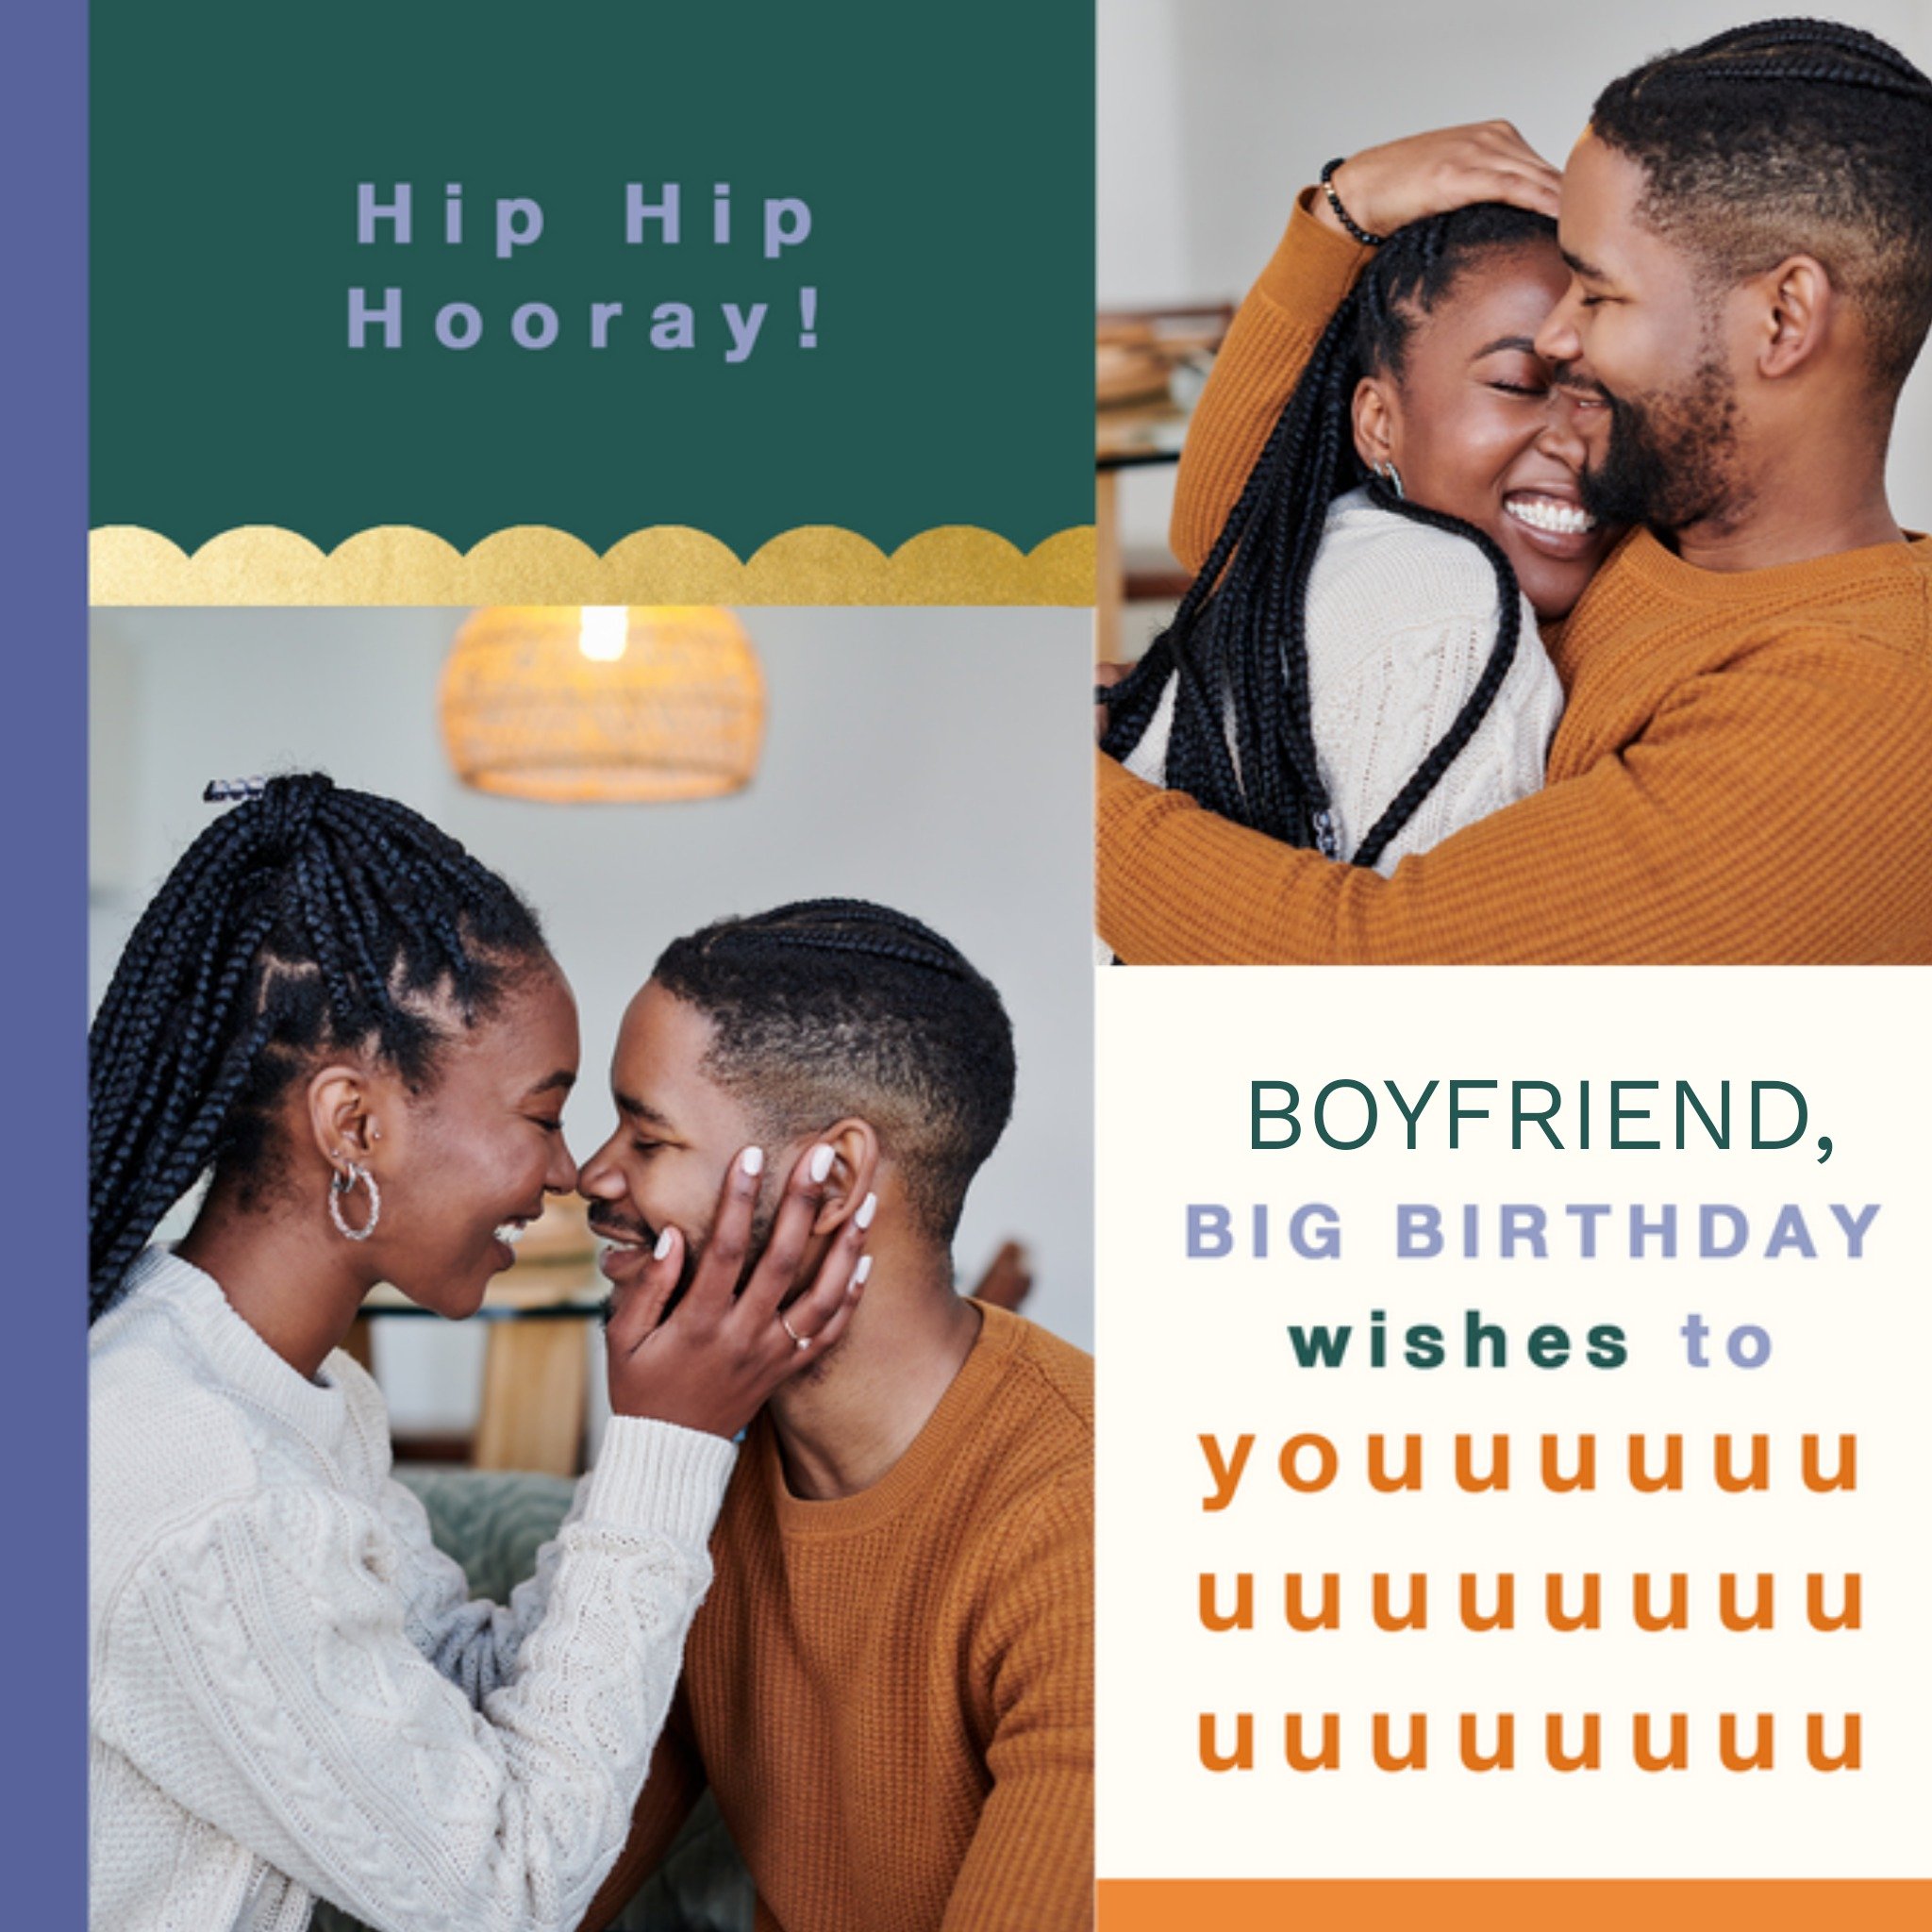 Moonpig Hip Hip Hooray Boyfriend Multi Coloured Blocky Photo Upload Birthday Card, Large